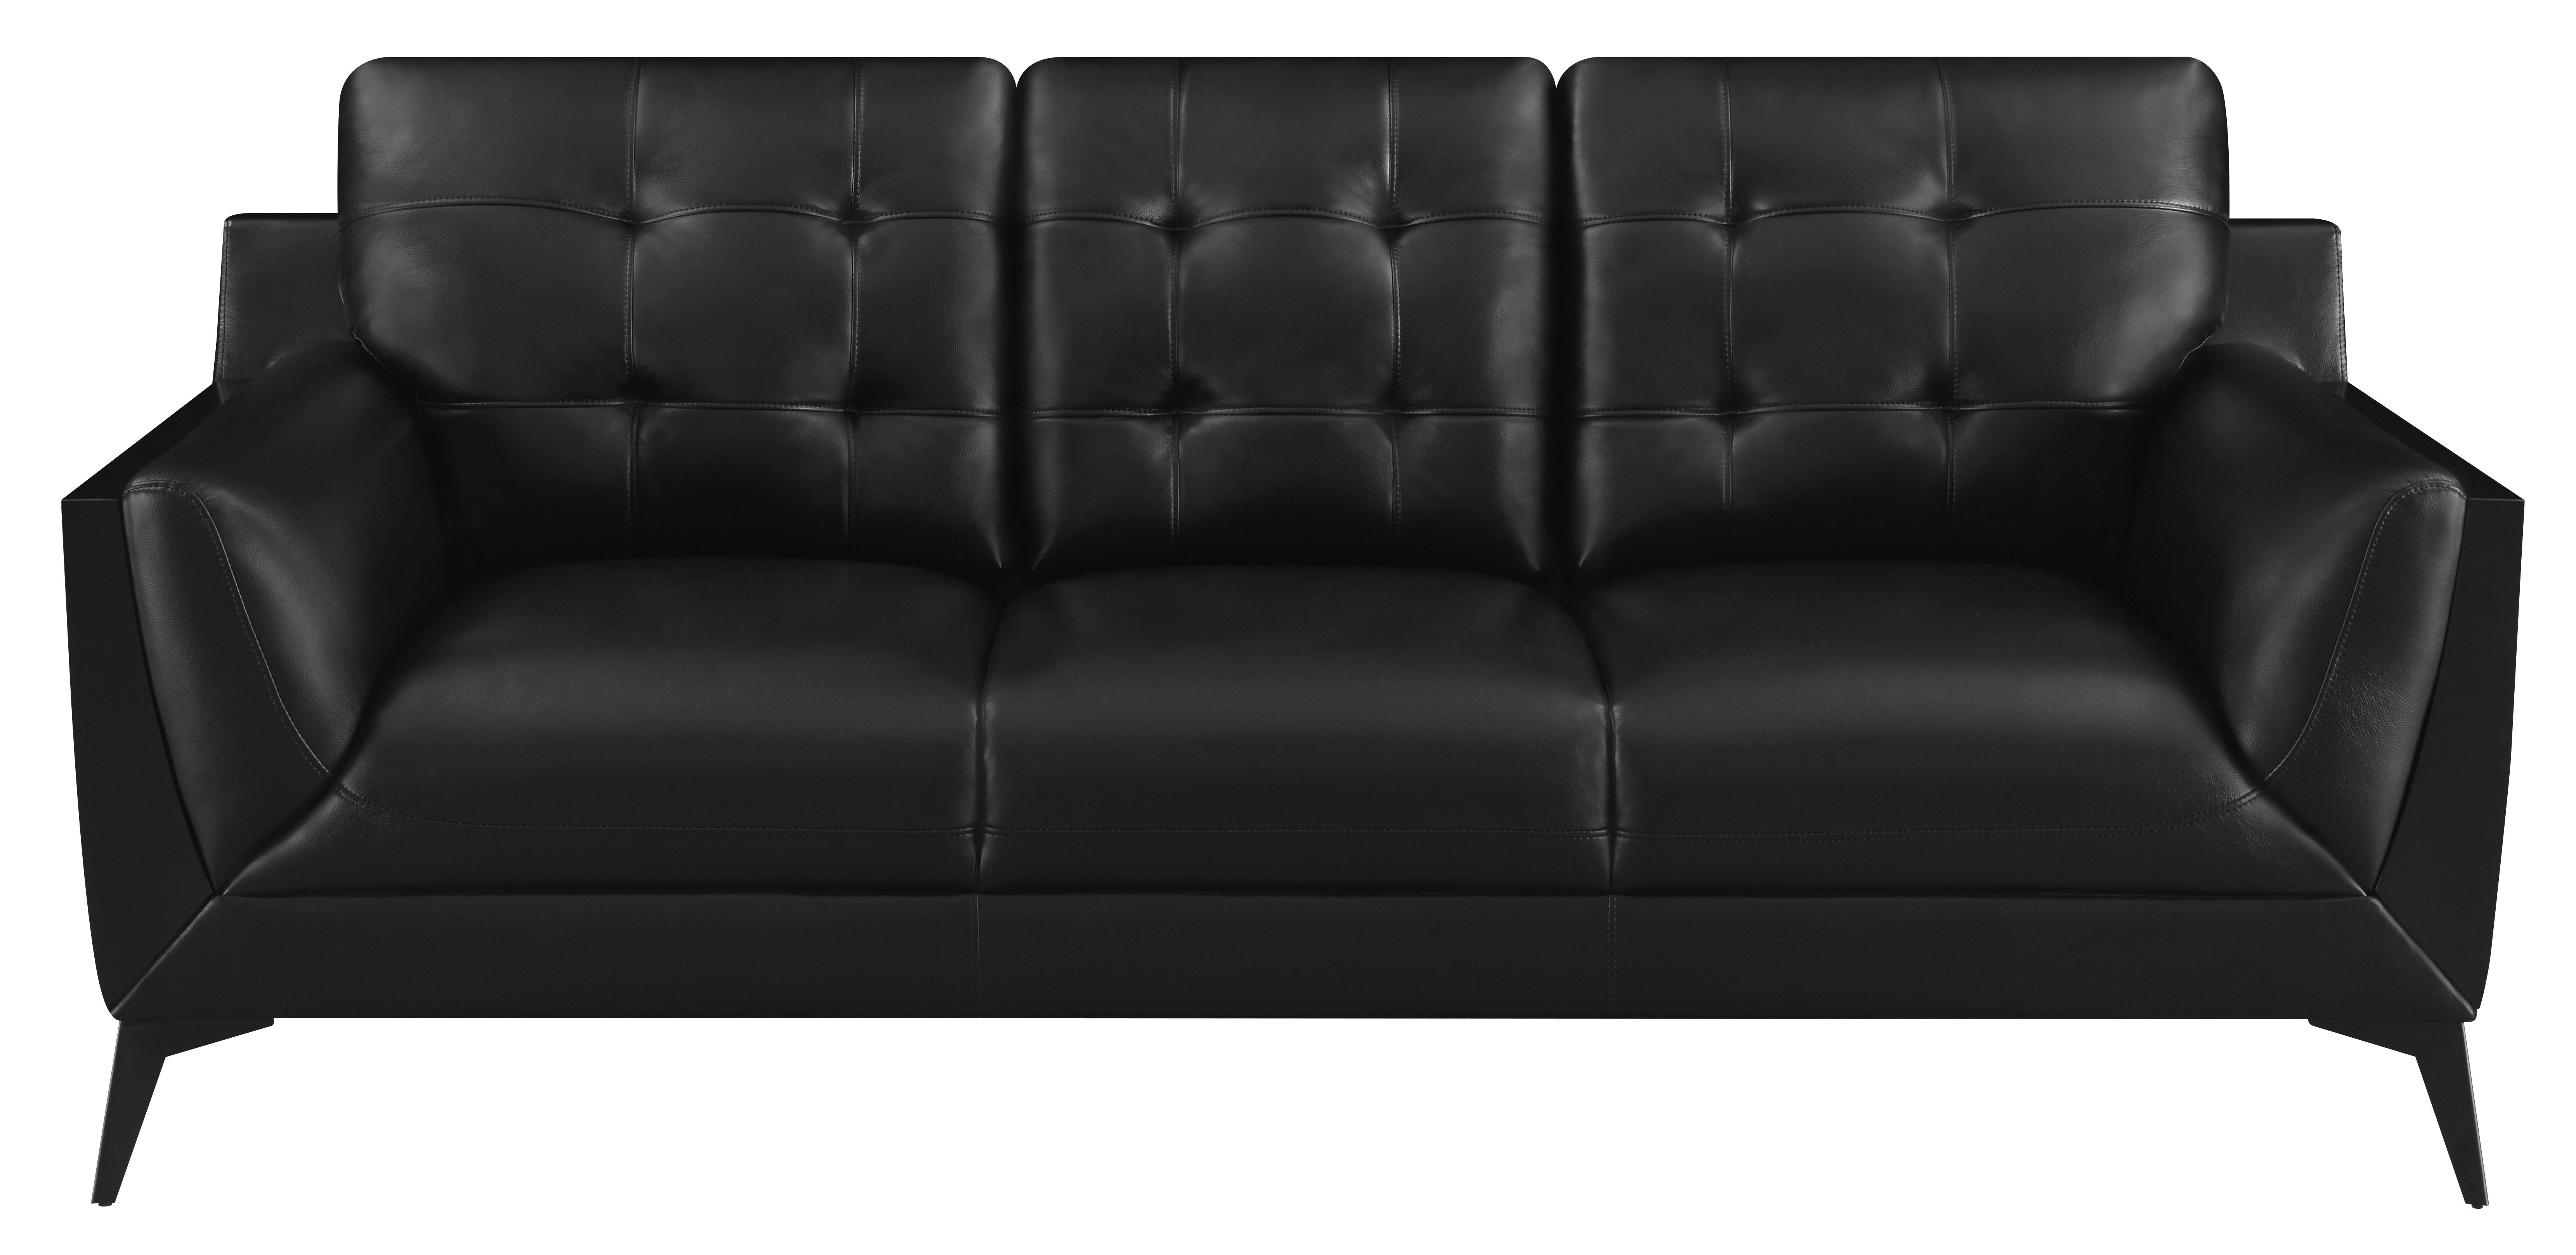 Contemporary Sofa 511131 Moira 511131 in Black Leatherette